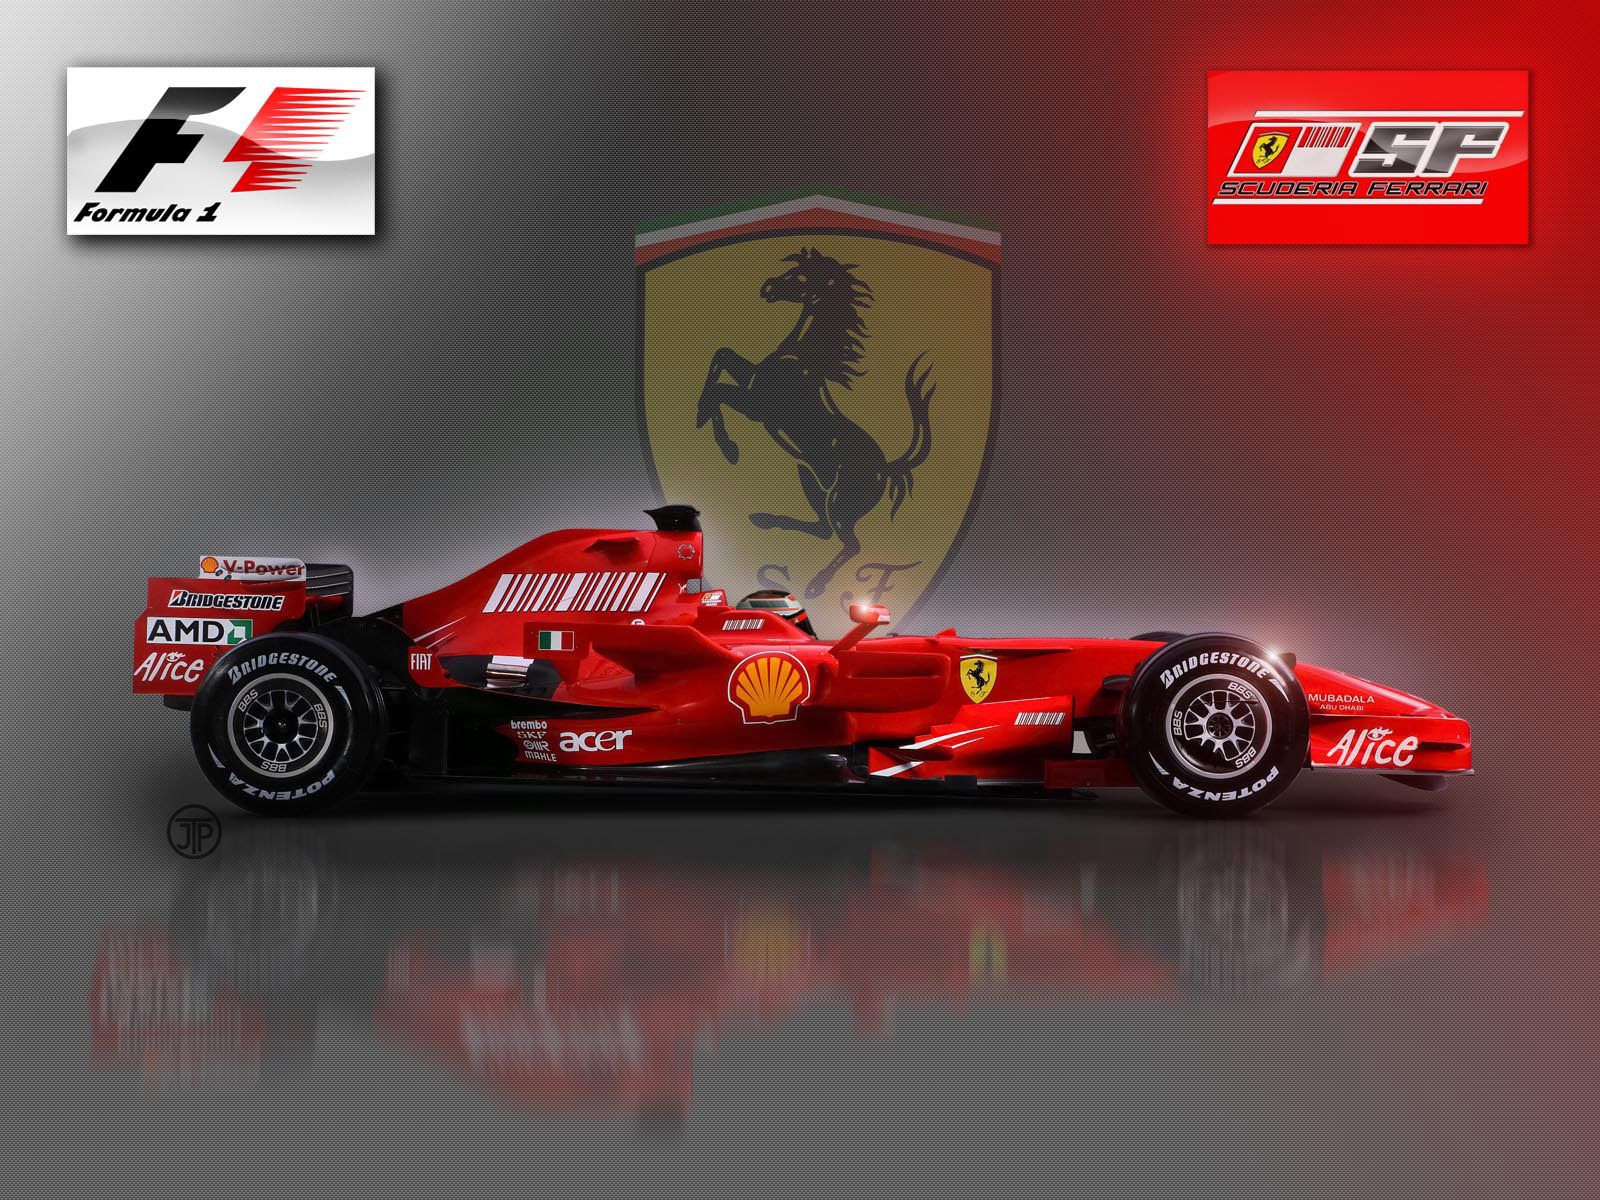 Ferrari F1 wallpaper, Vehicles, HQ Ferrari F1 pictureK